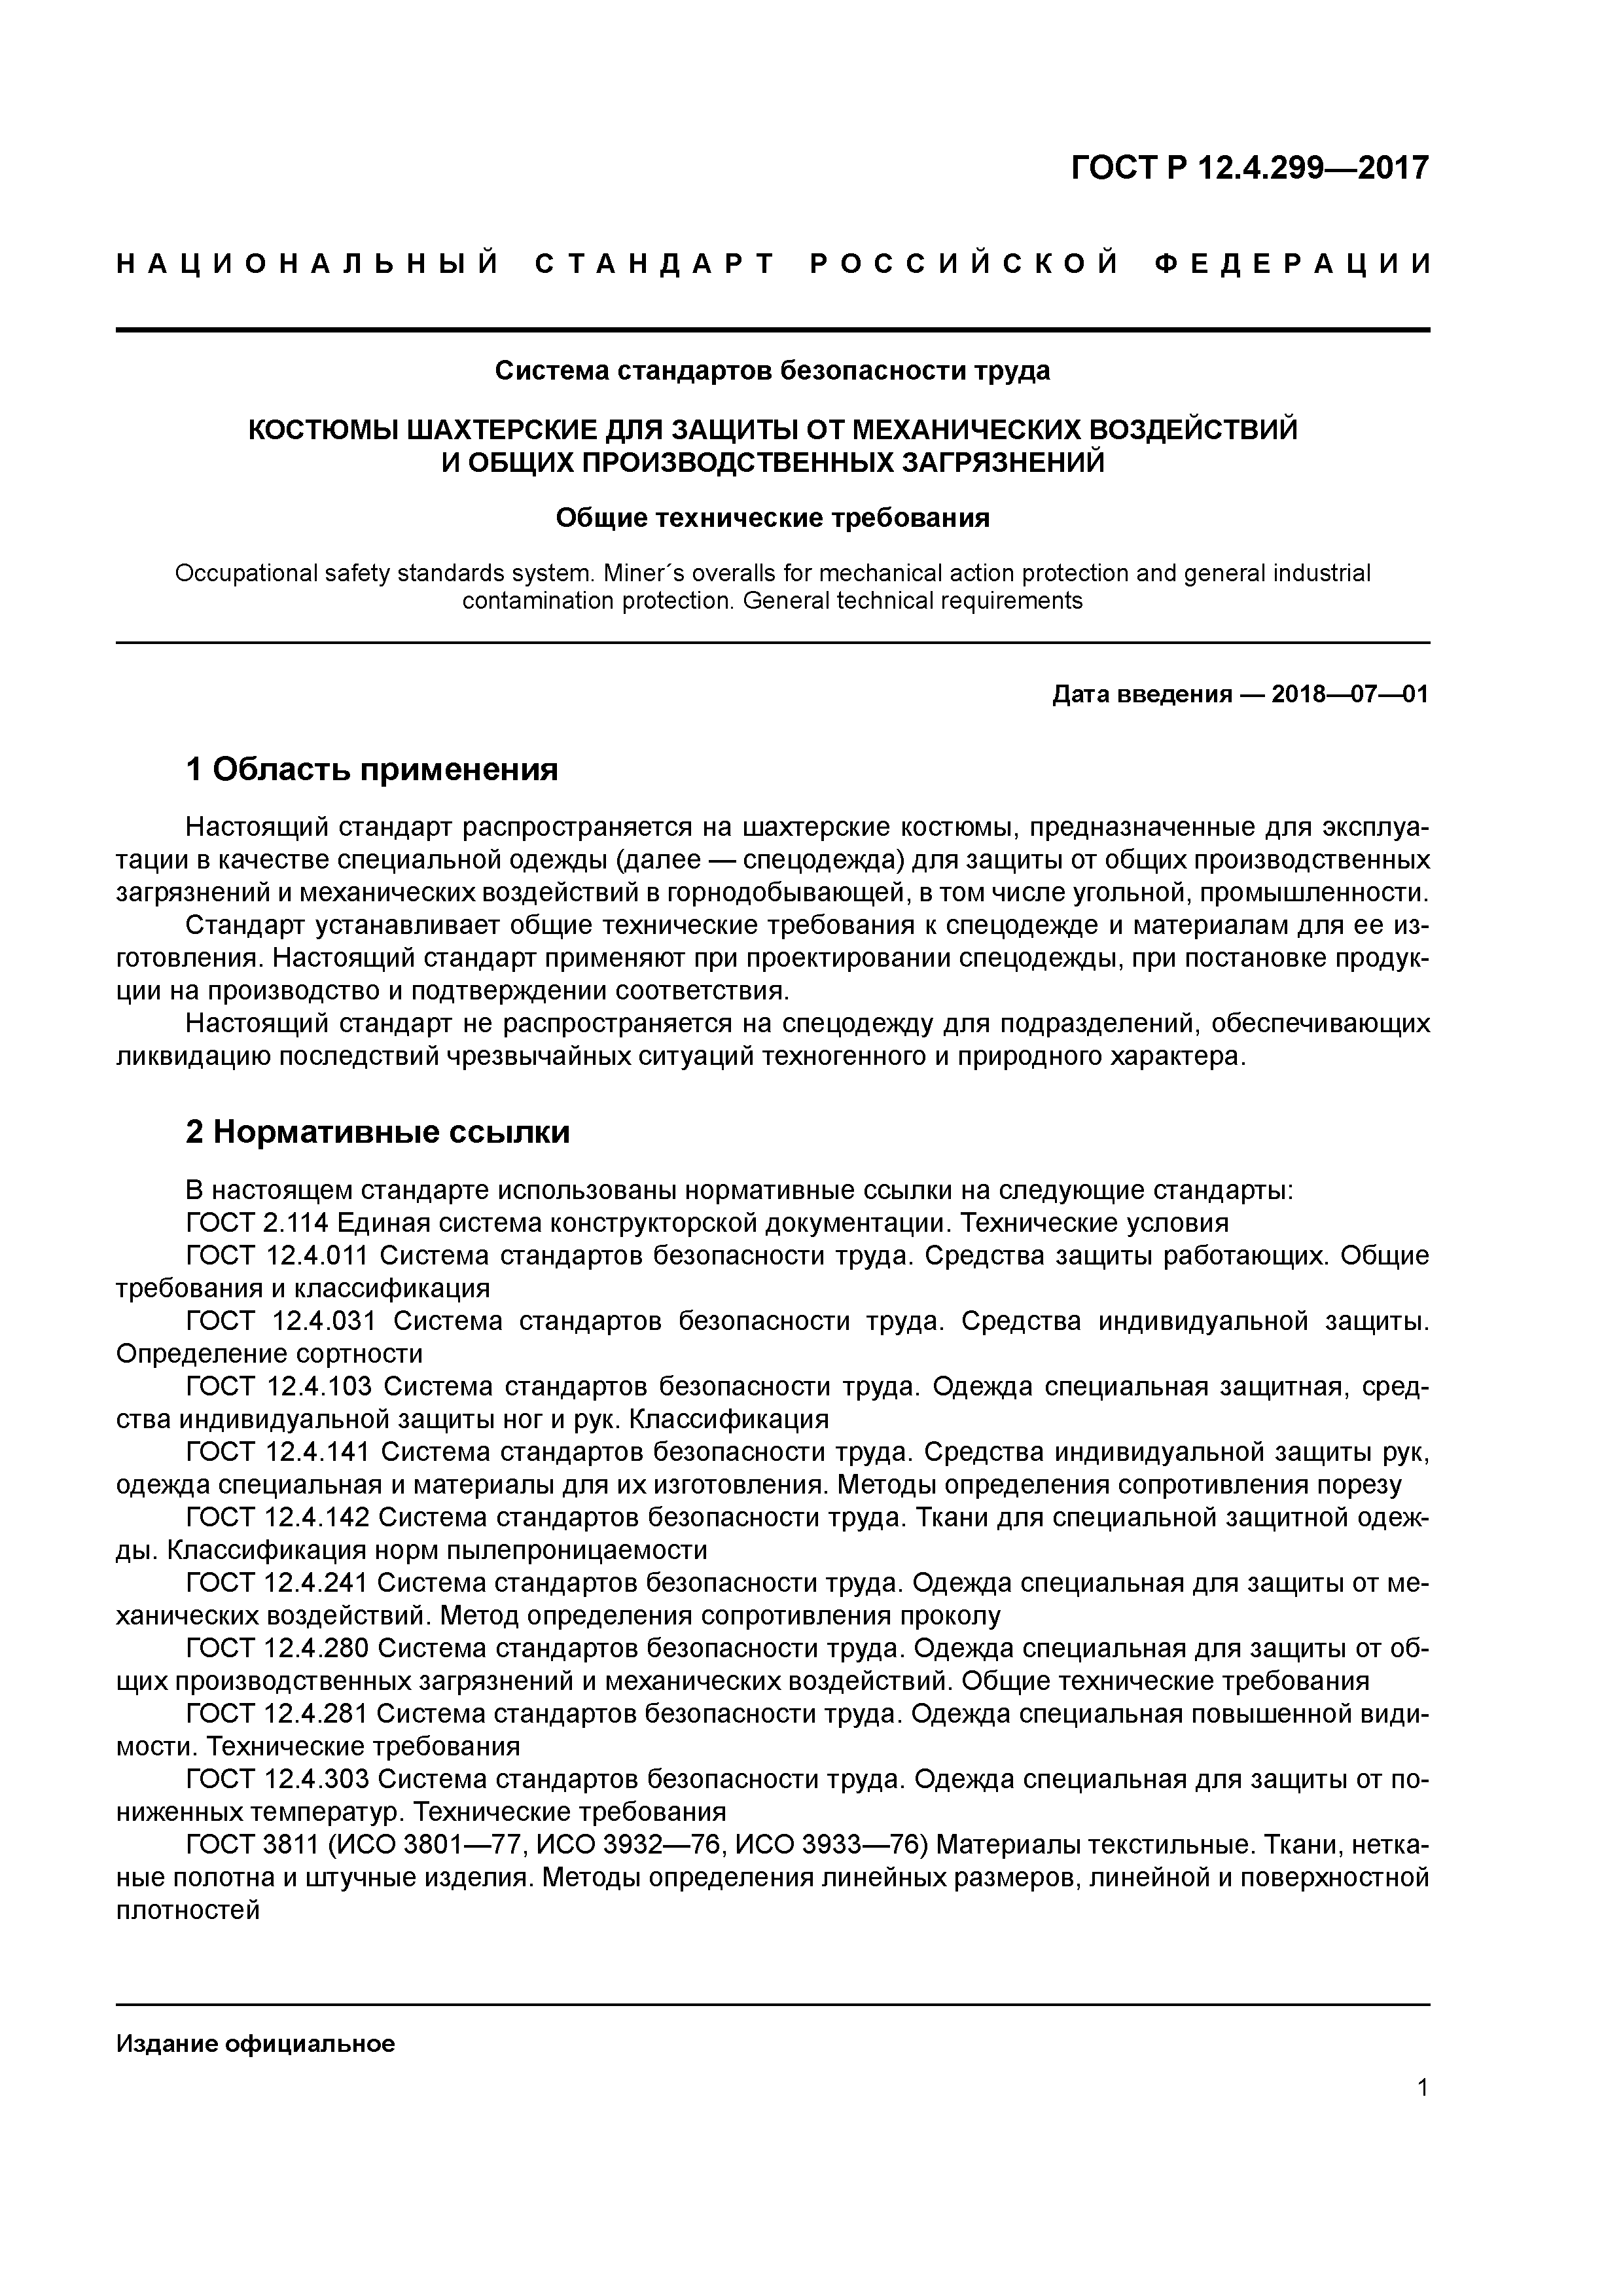 ГОСТ Р 12.4.299-2017